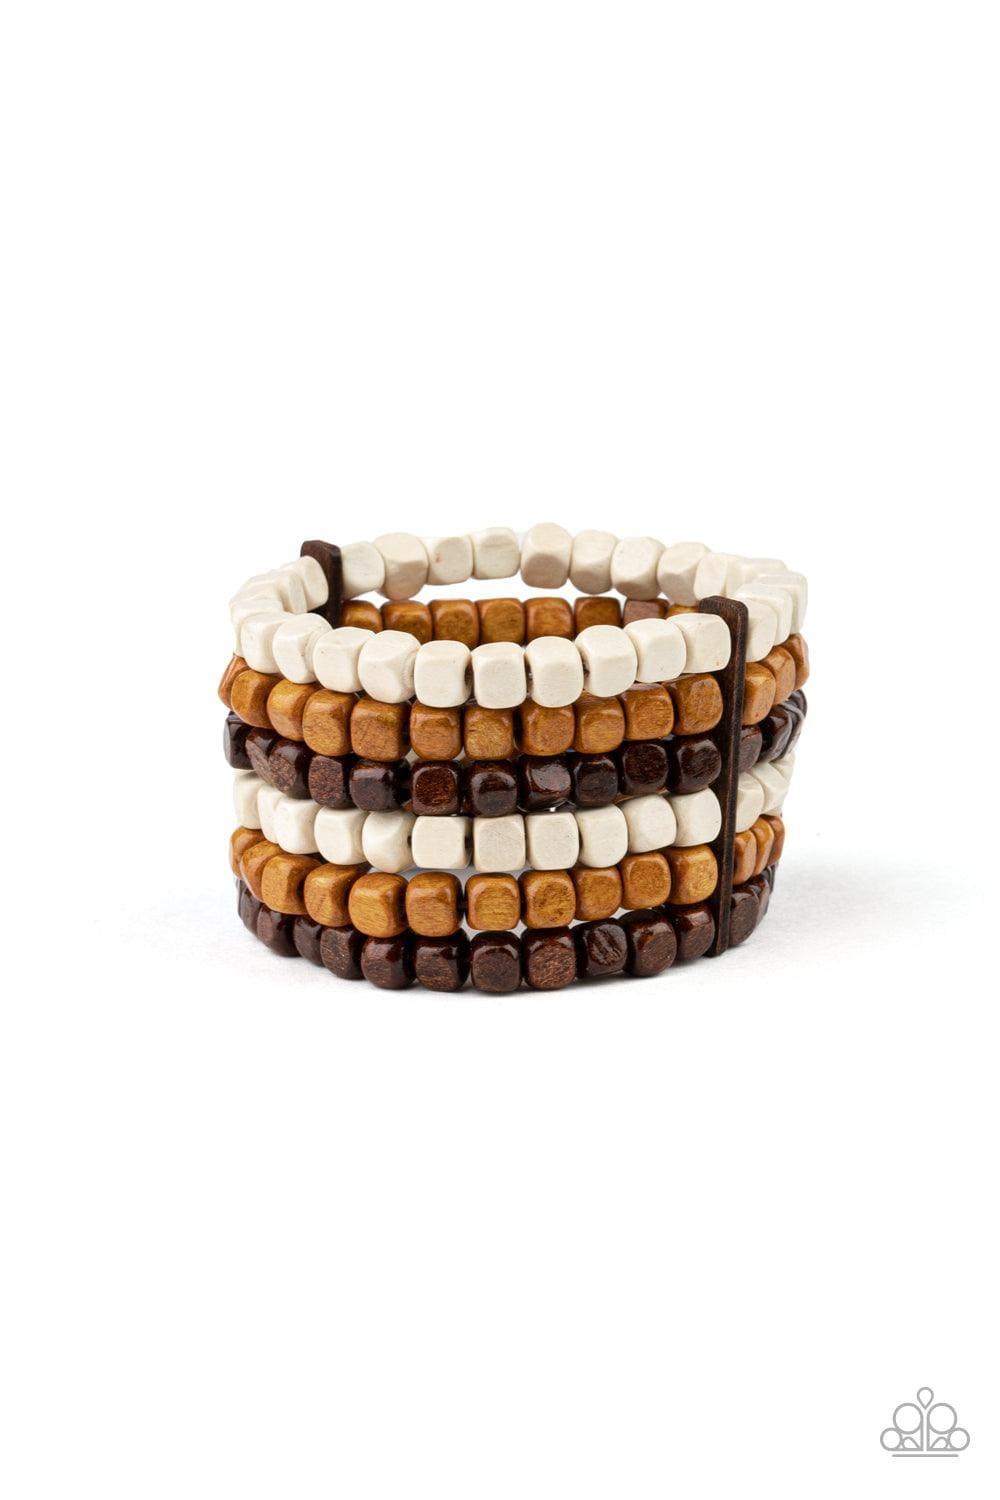 Paparazzi Accessories - Tropical Tundra - Brown Bracelet - Bling by JessieK